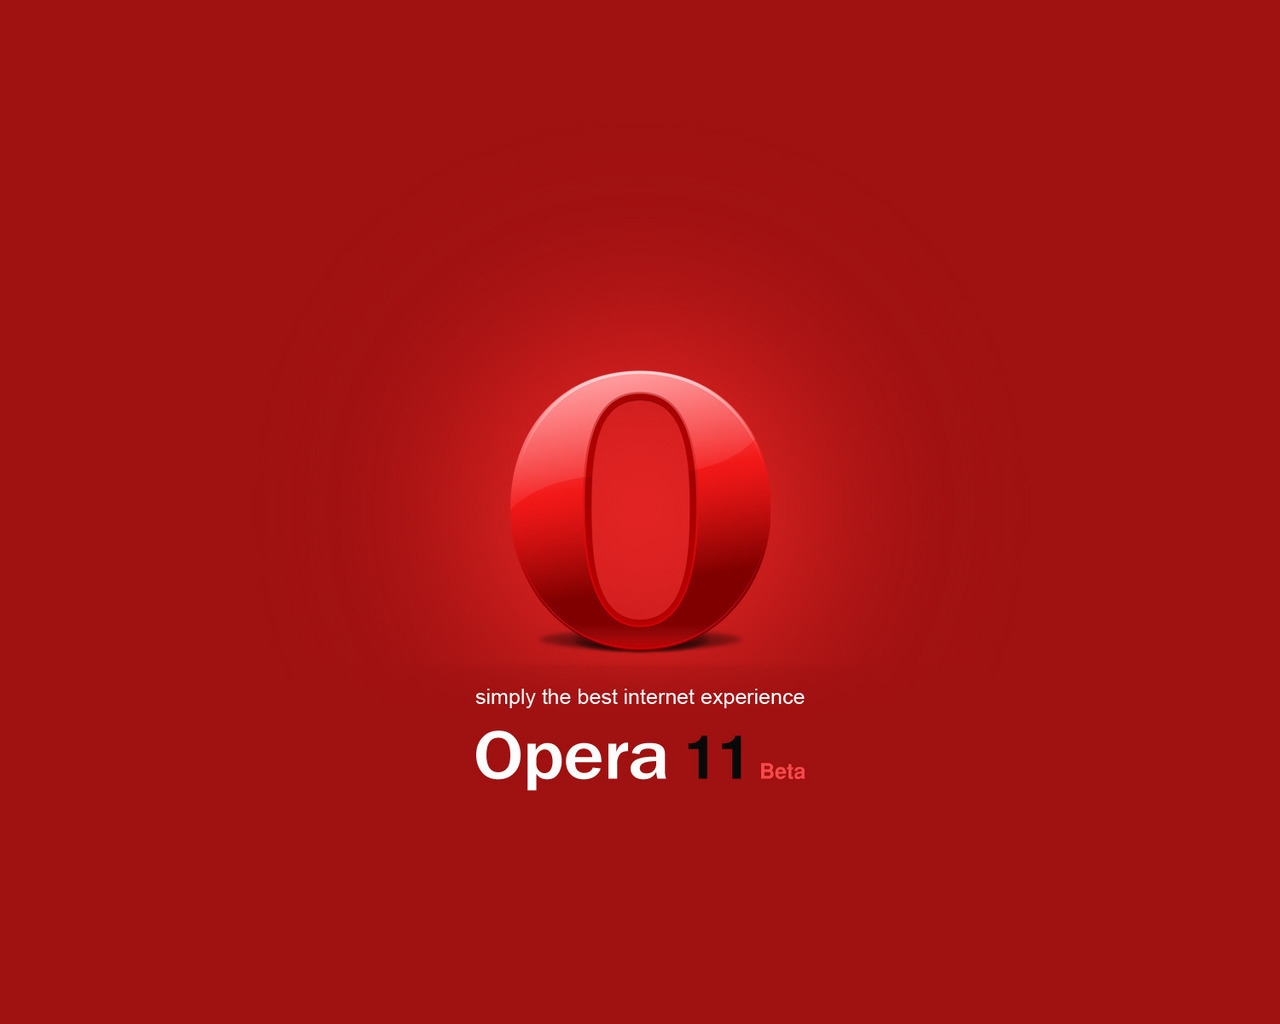 Opera 11 Beta for 1280 x 1024 resolution